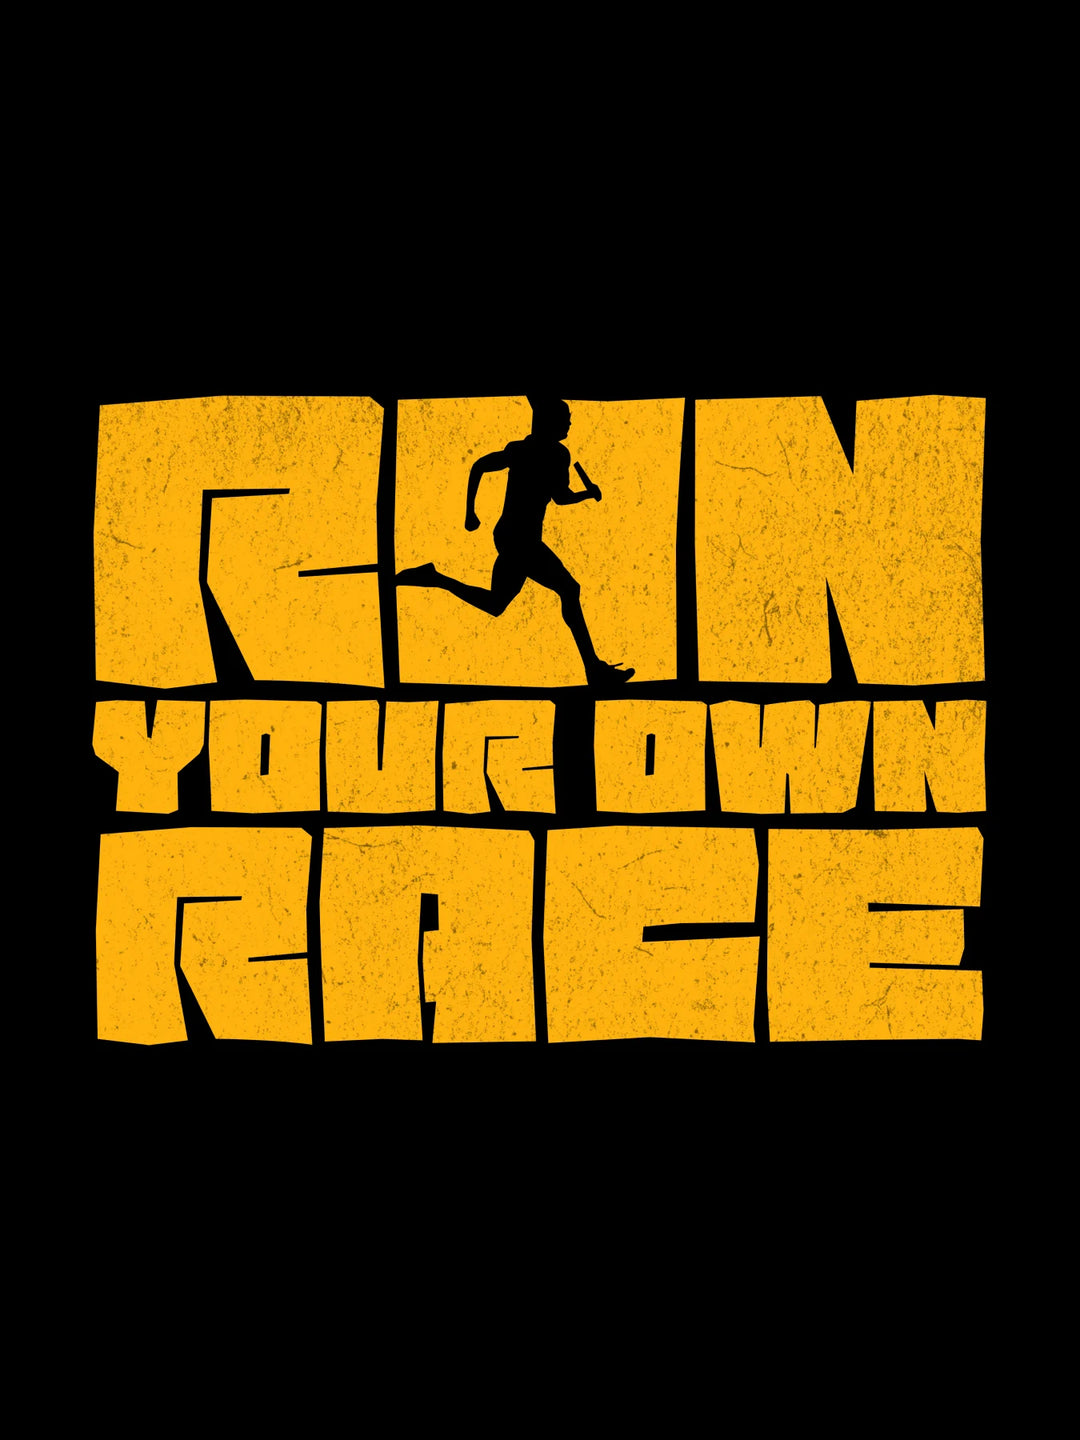 Run Your Own Race - Unisex T-Shirt